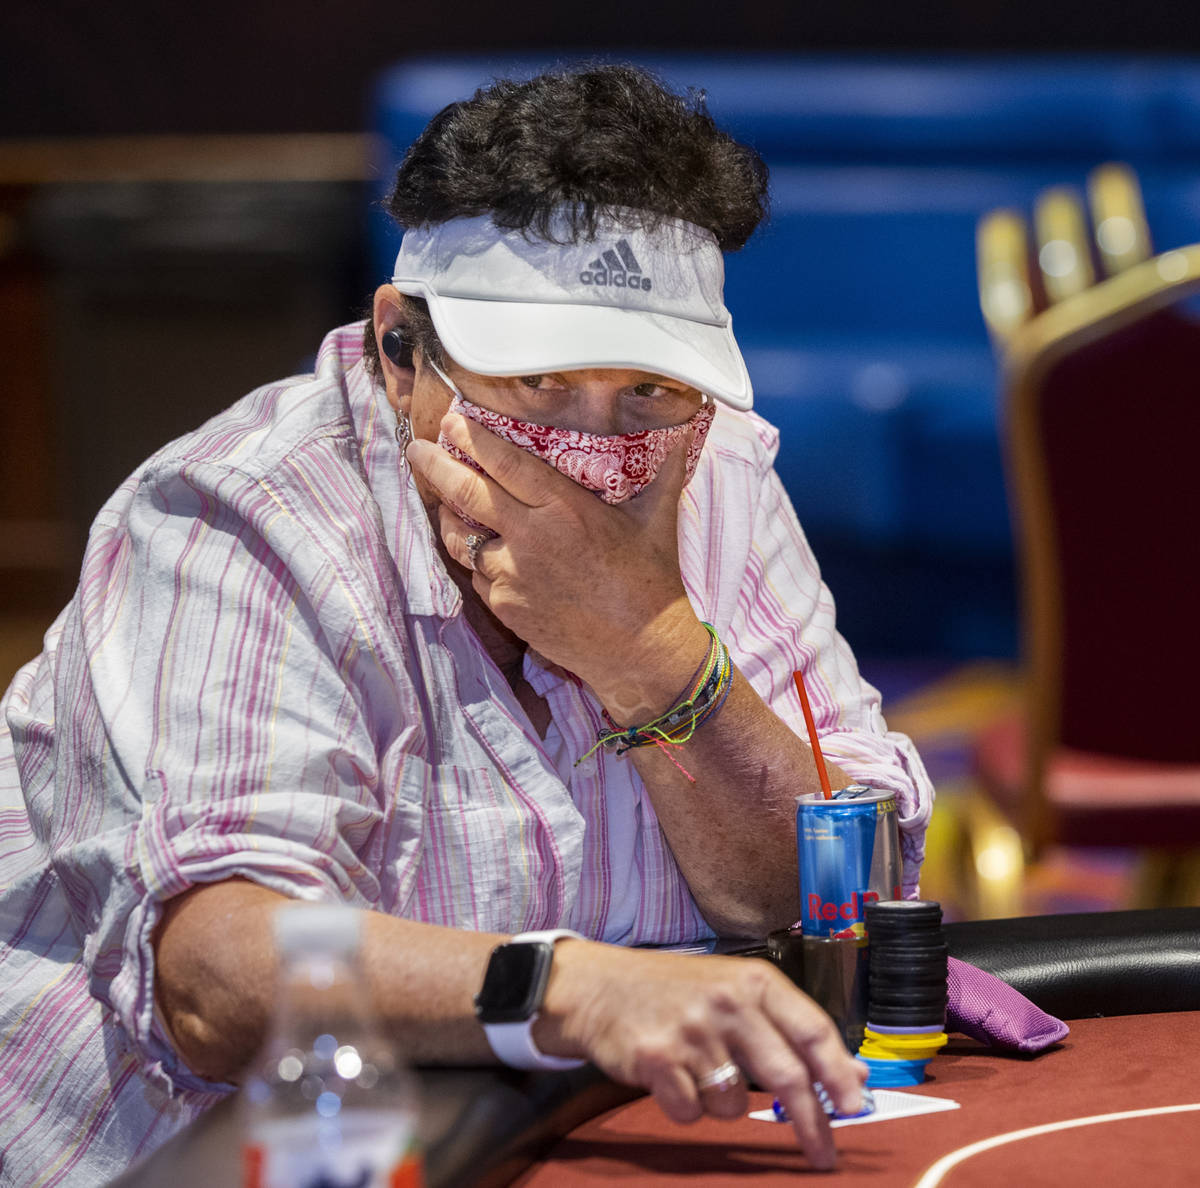 Women in poker rooms face abuse, vulgar behavior from competitive men Poker Sports